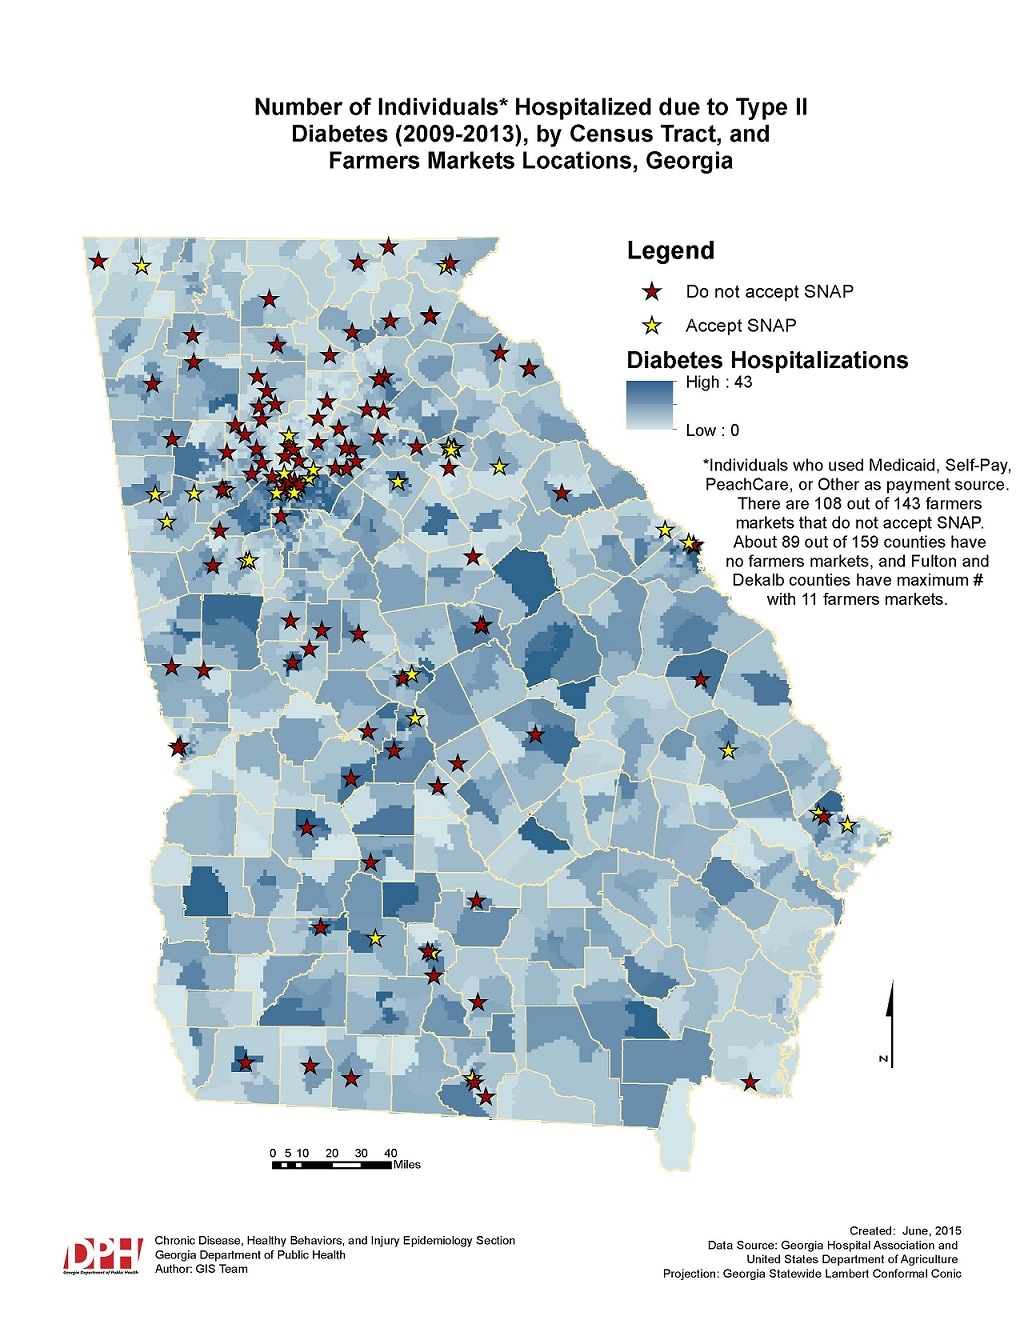 Diabetes Hospitalizations and Access to Farmer’s Markets, Georgia